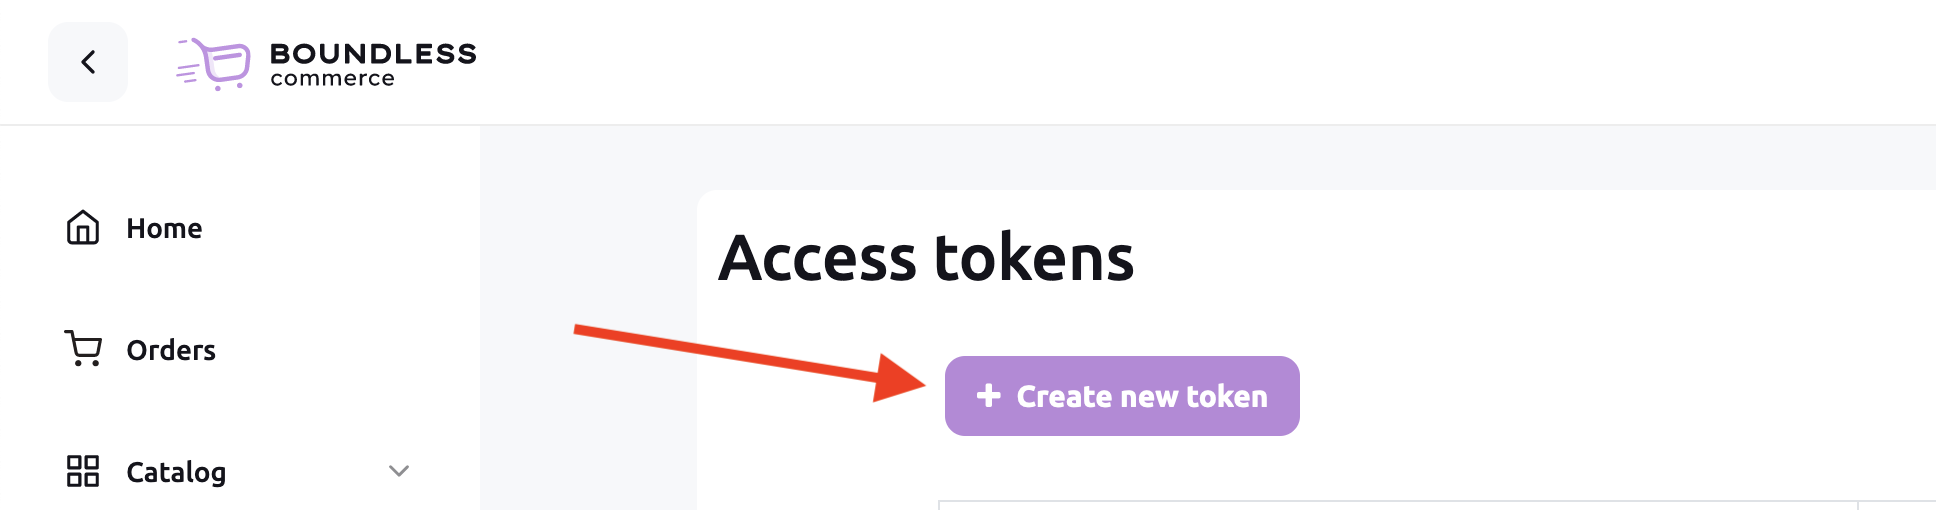 create-access-token-btn.png